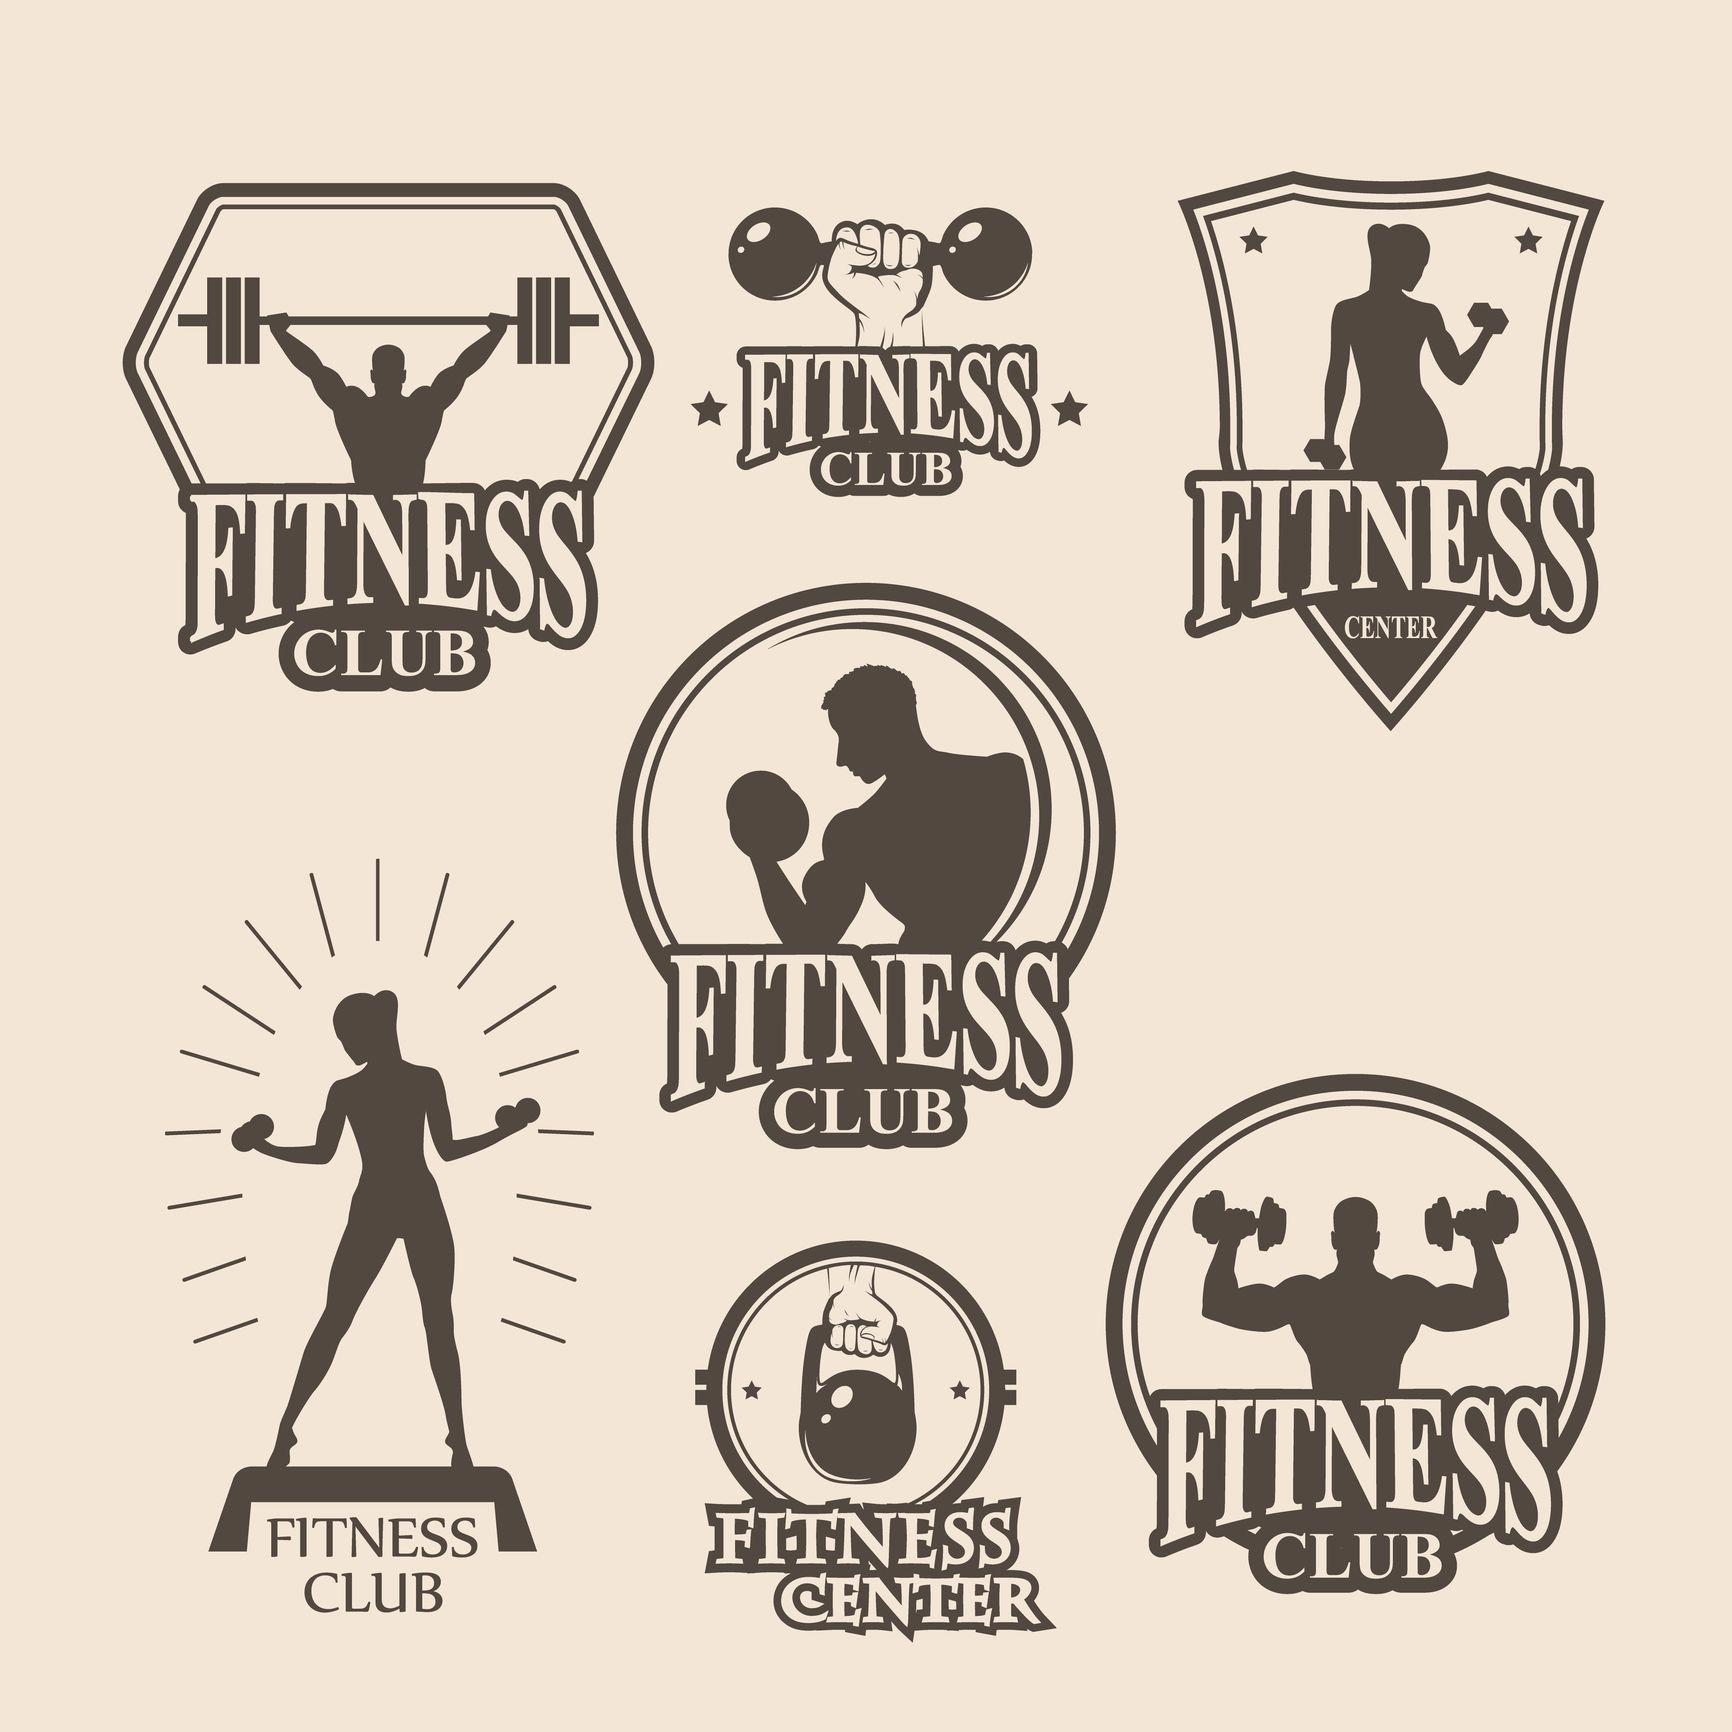 Fitness Logo - Design Elements of a Fitness Logo That Motivates • Online Logo